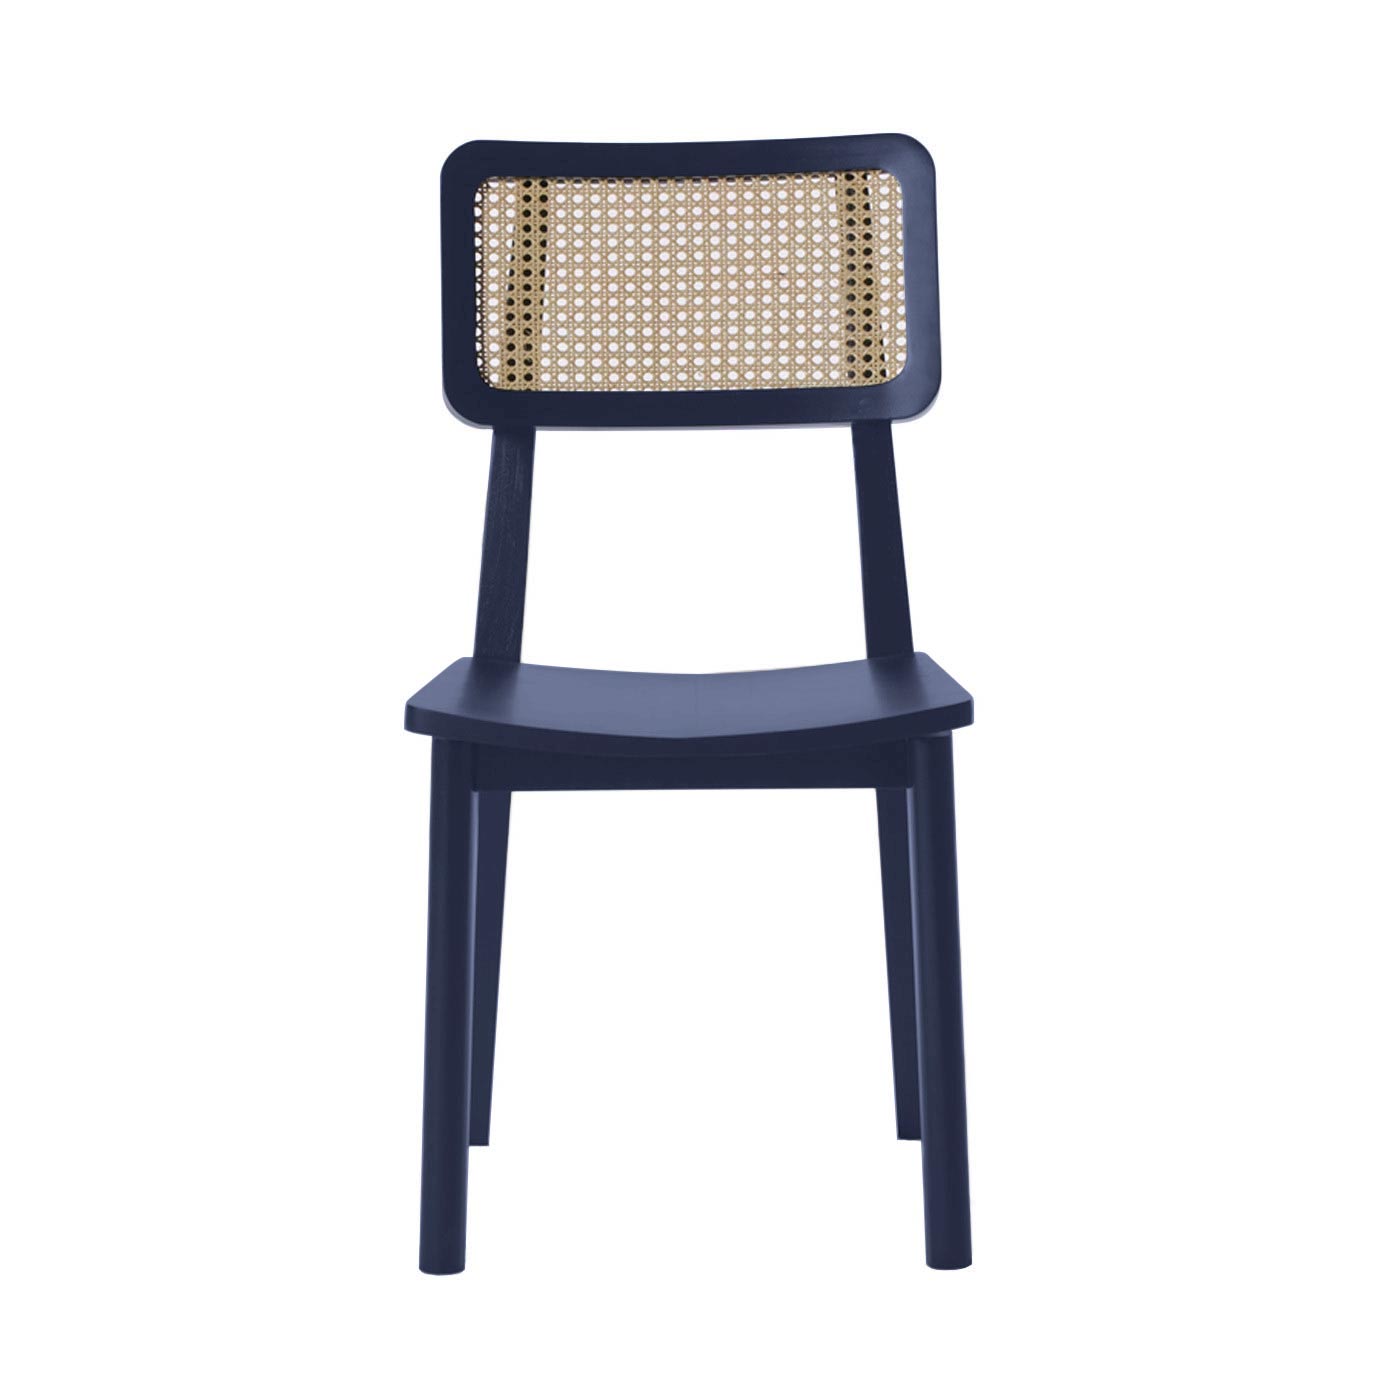 Ratargul Blue Dining chair